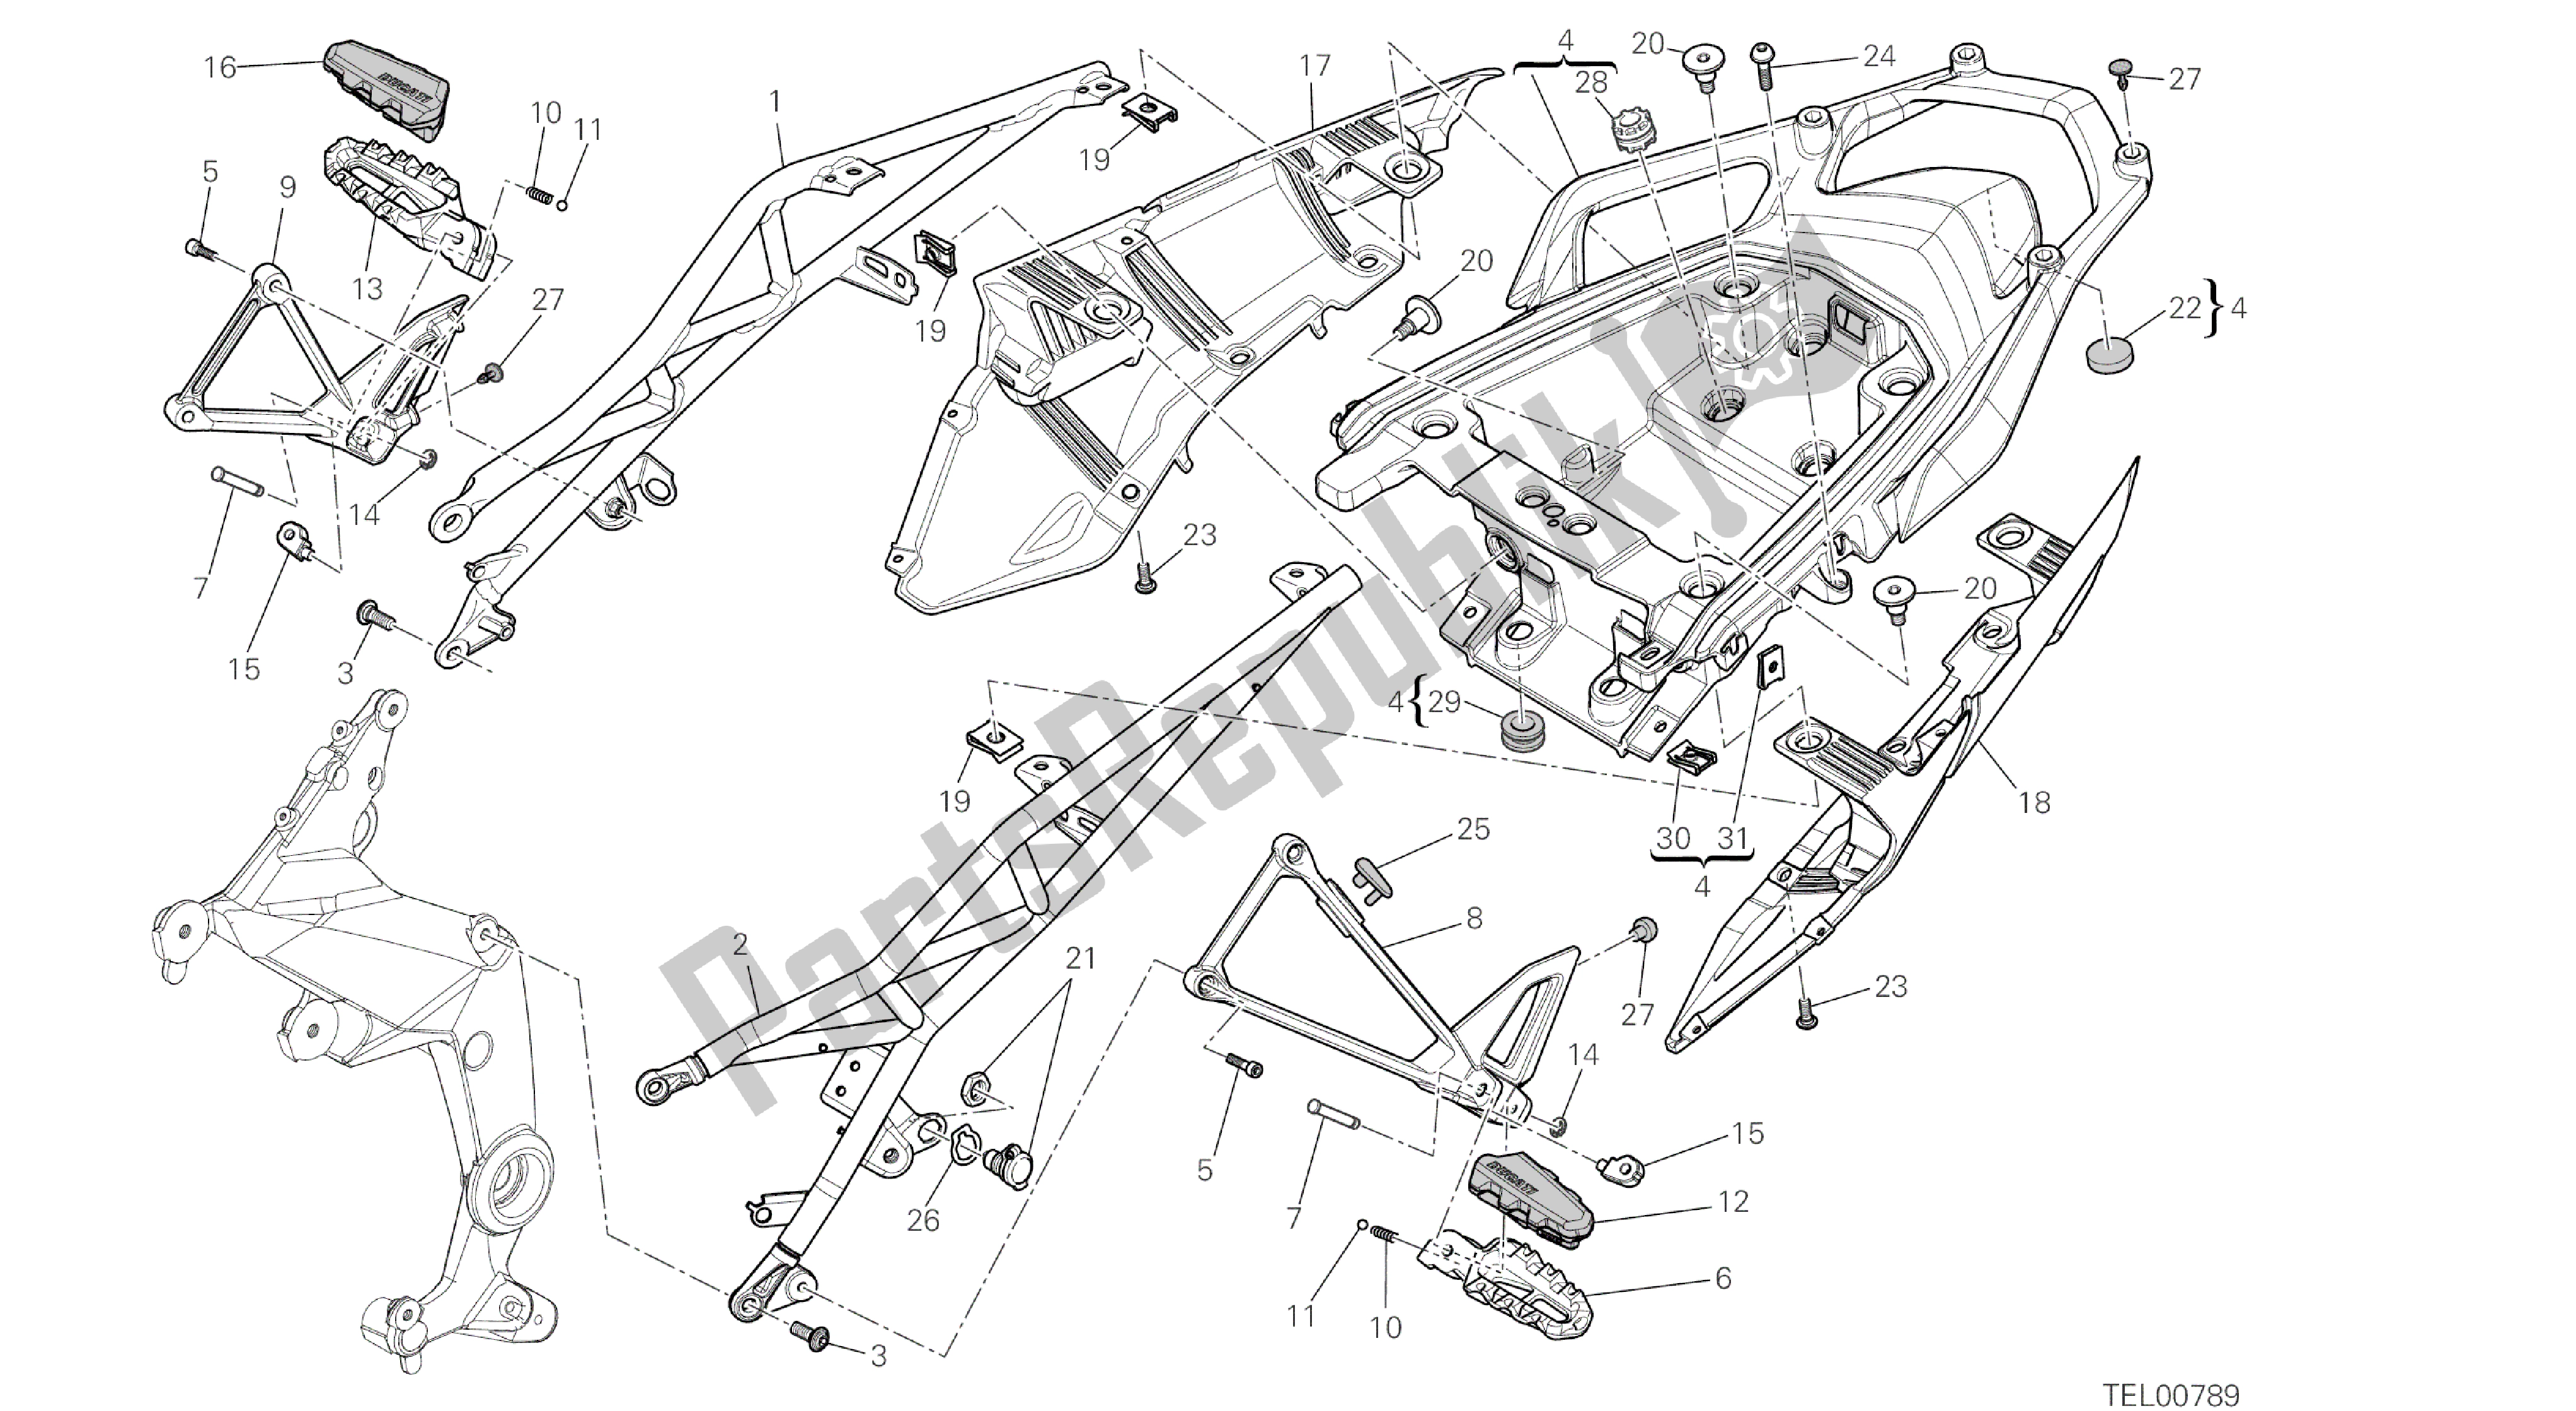 Todas las partes para Dibujo 027 - Cuadro Trasero Comp. [mod: Ms1200pp; Xst: Marco De Grupo Aus, Eur, Fra, Jap, Tha] de Ducati Multistrada S Pikes Peak 1200 2014